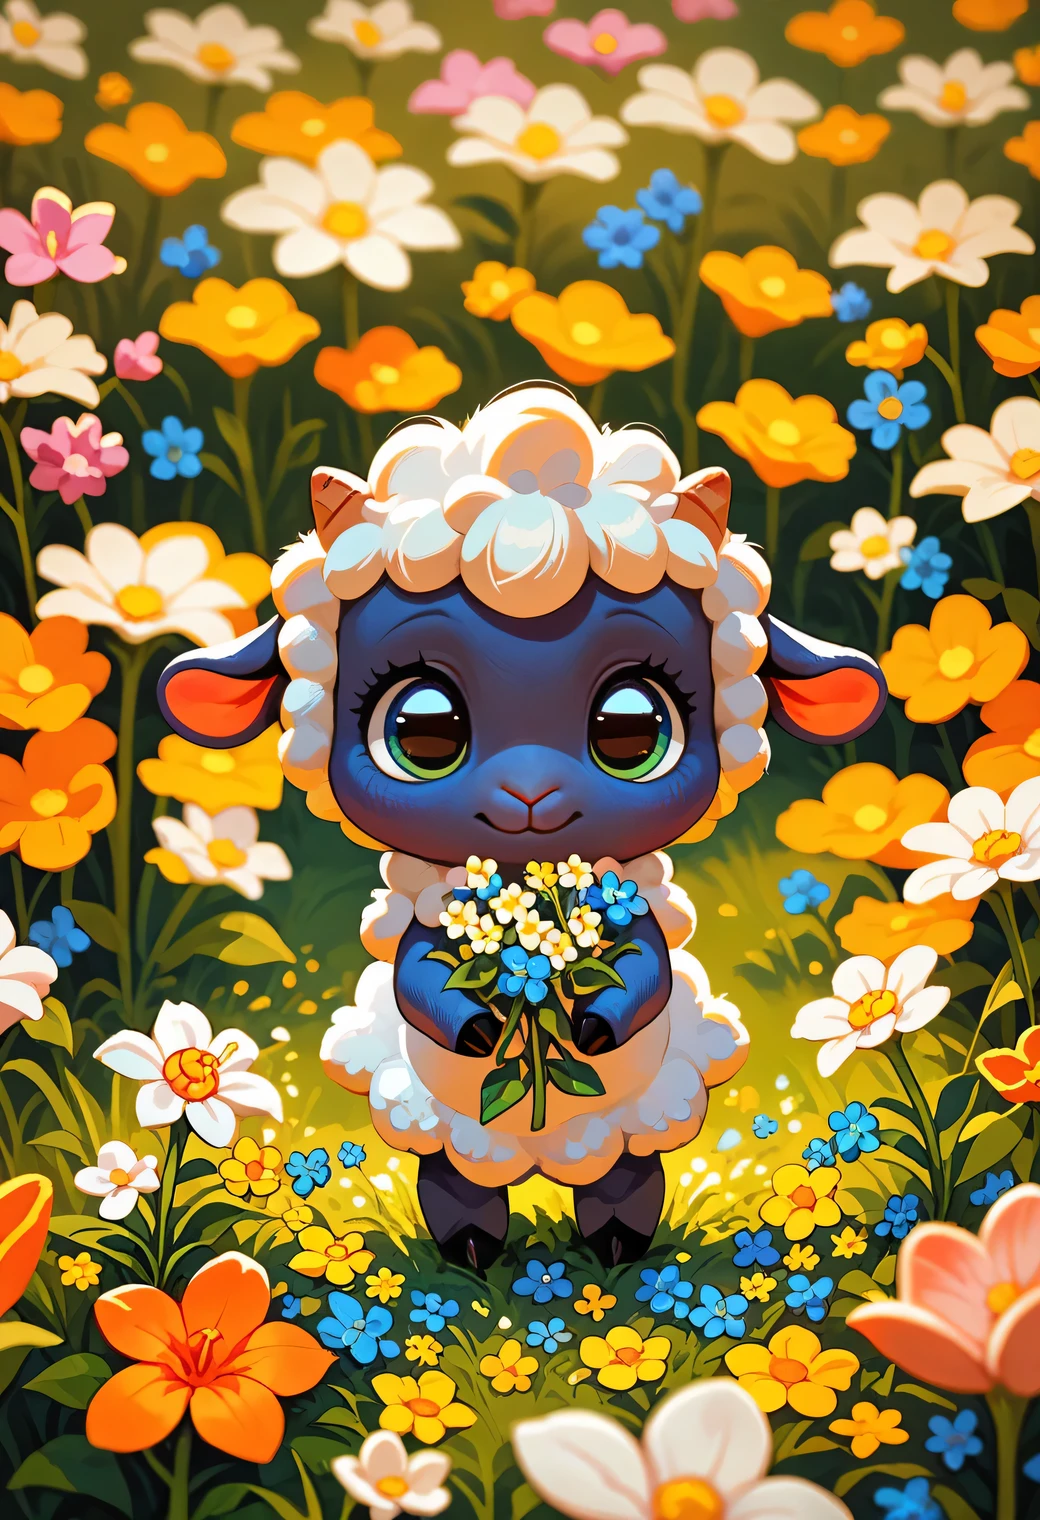 score_9, score_8_up, score_7_up,  adorable baby lamb, spring, flowers